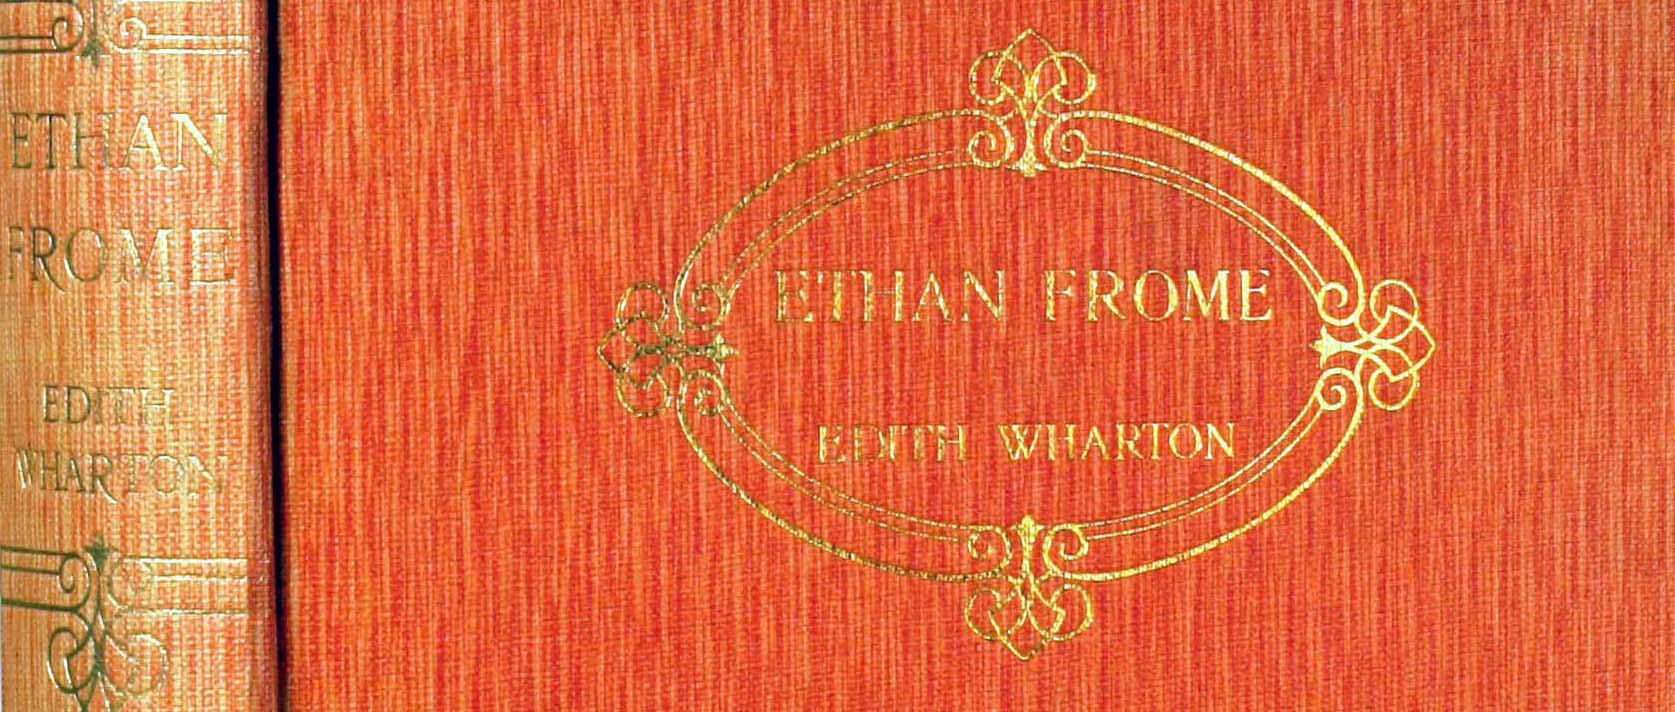 Edith Wharton, Ethan Frome (1911). An extraordinary signed association copy.